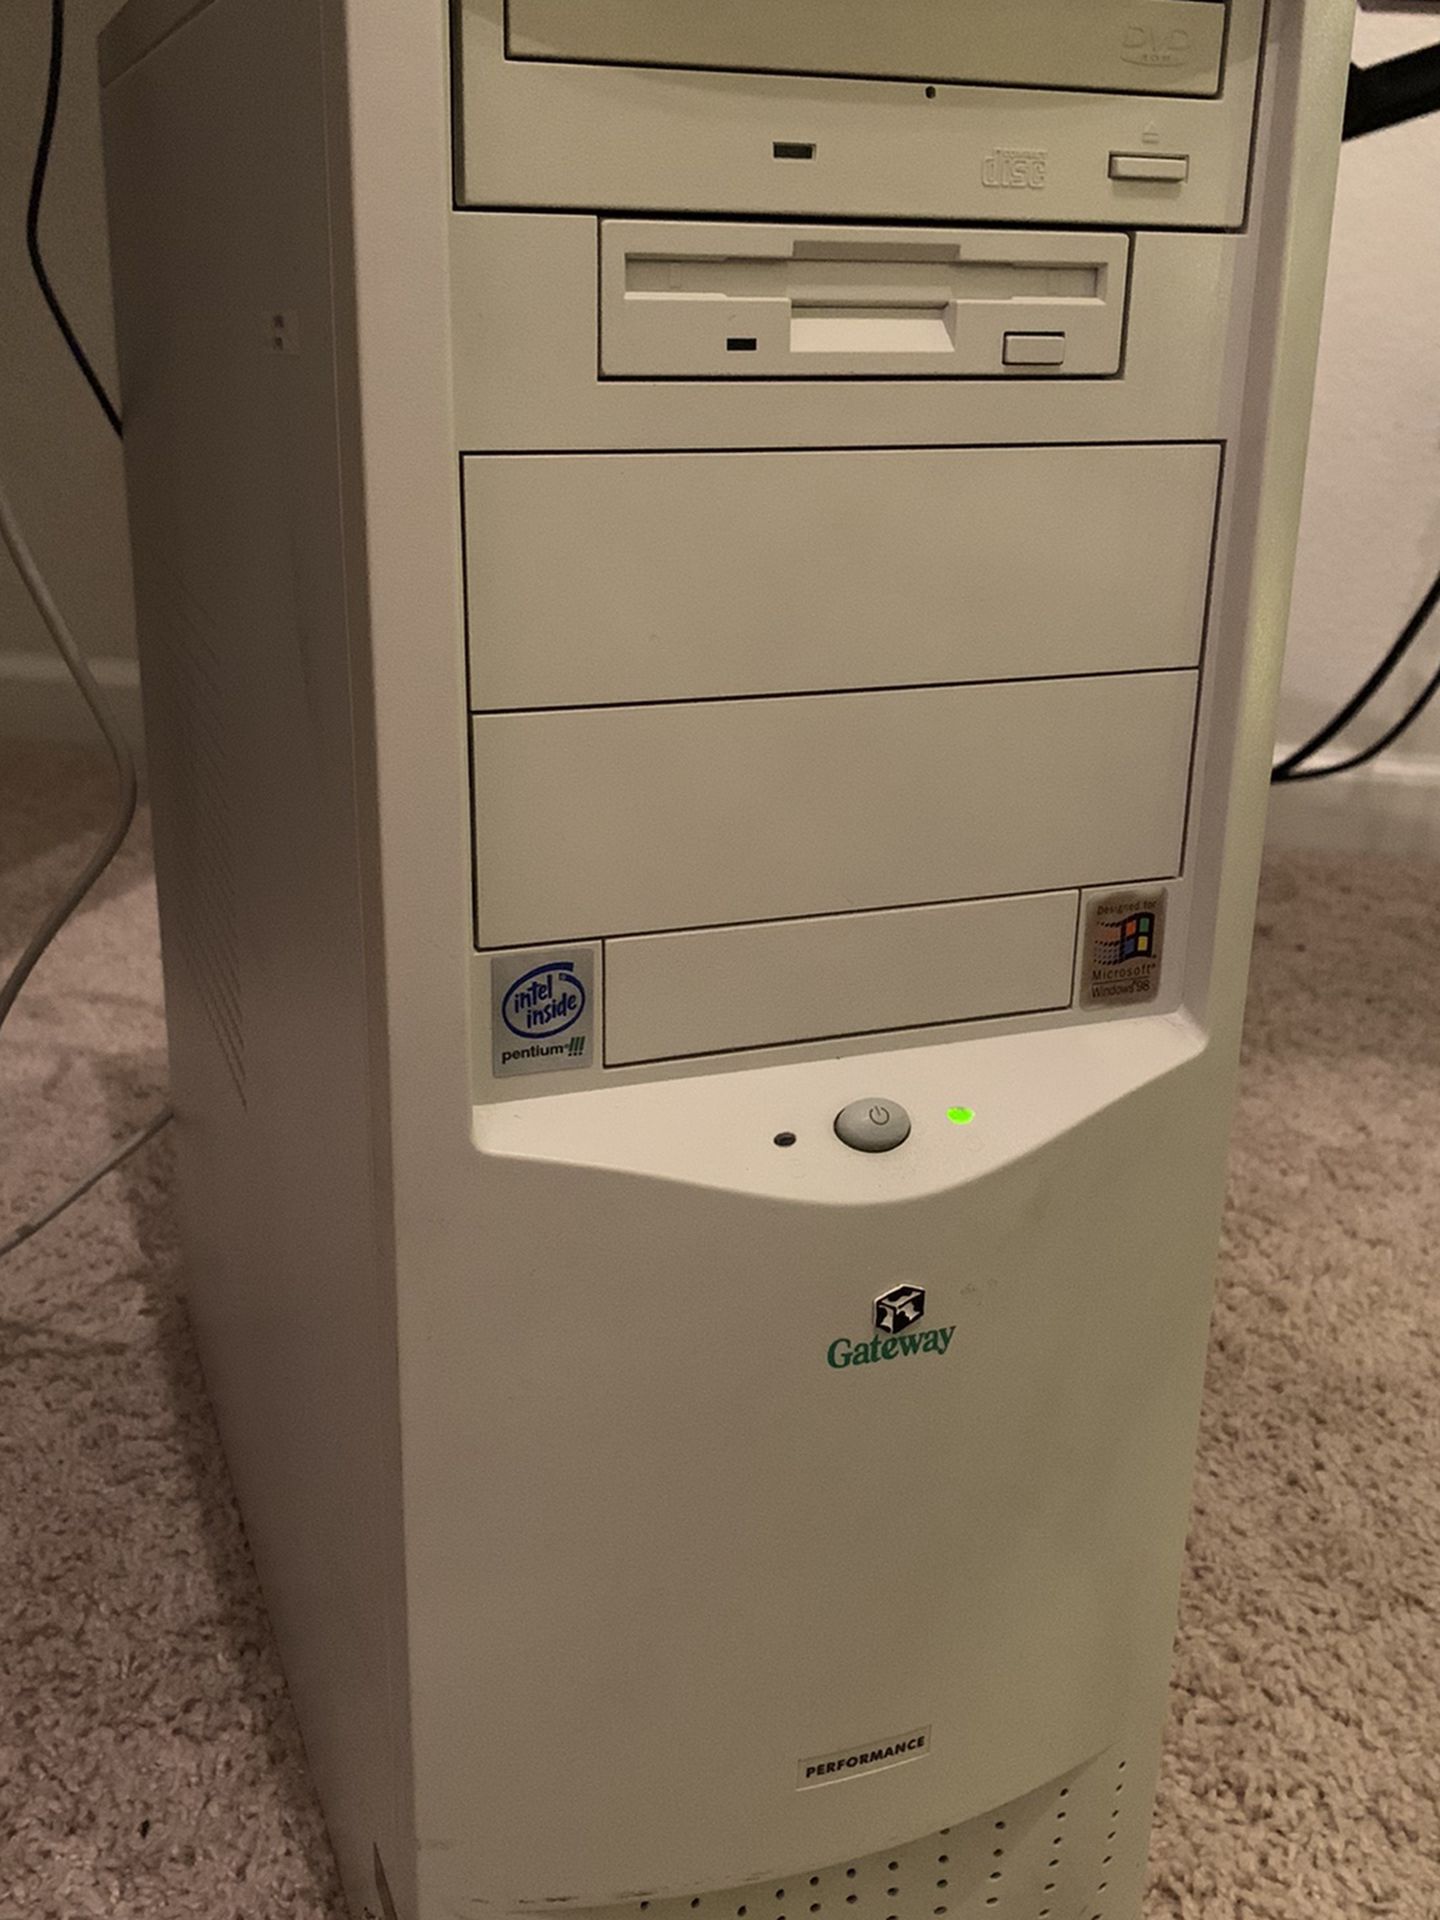 Gateway PC Windows 98 - Vintage Beige Desktop Tower & Keyboard